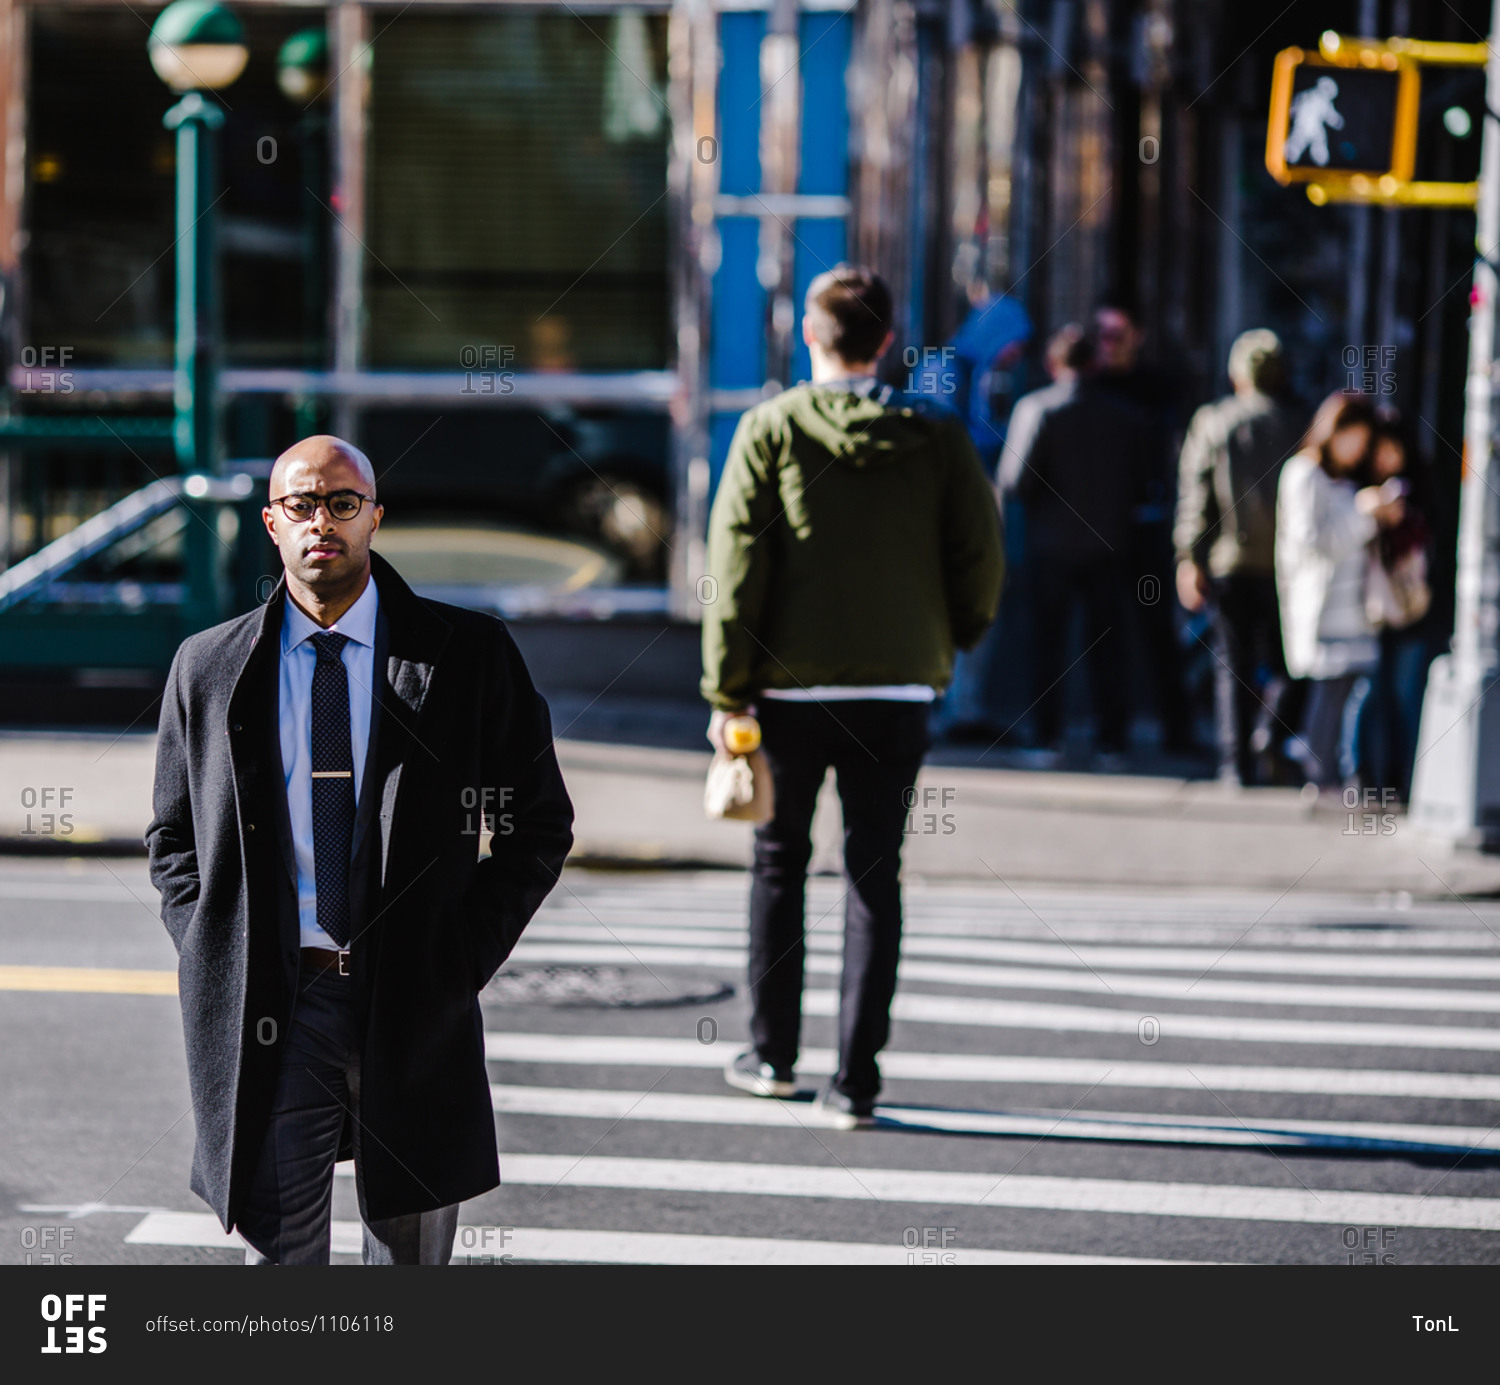 Medium shot of a bald black man in a heavy coat walking across a pedestrian crossing outside his office building